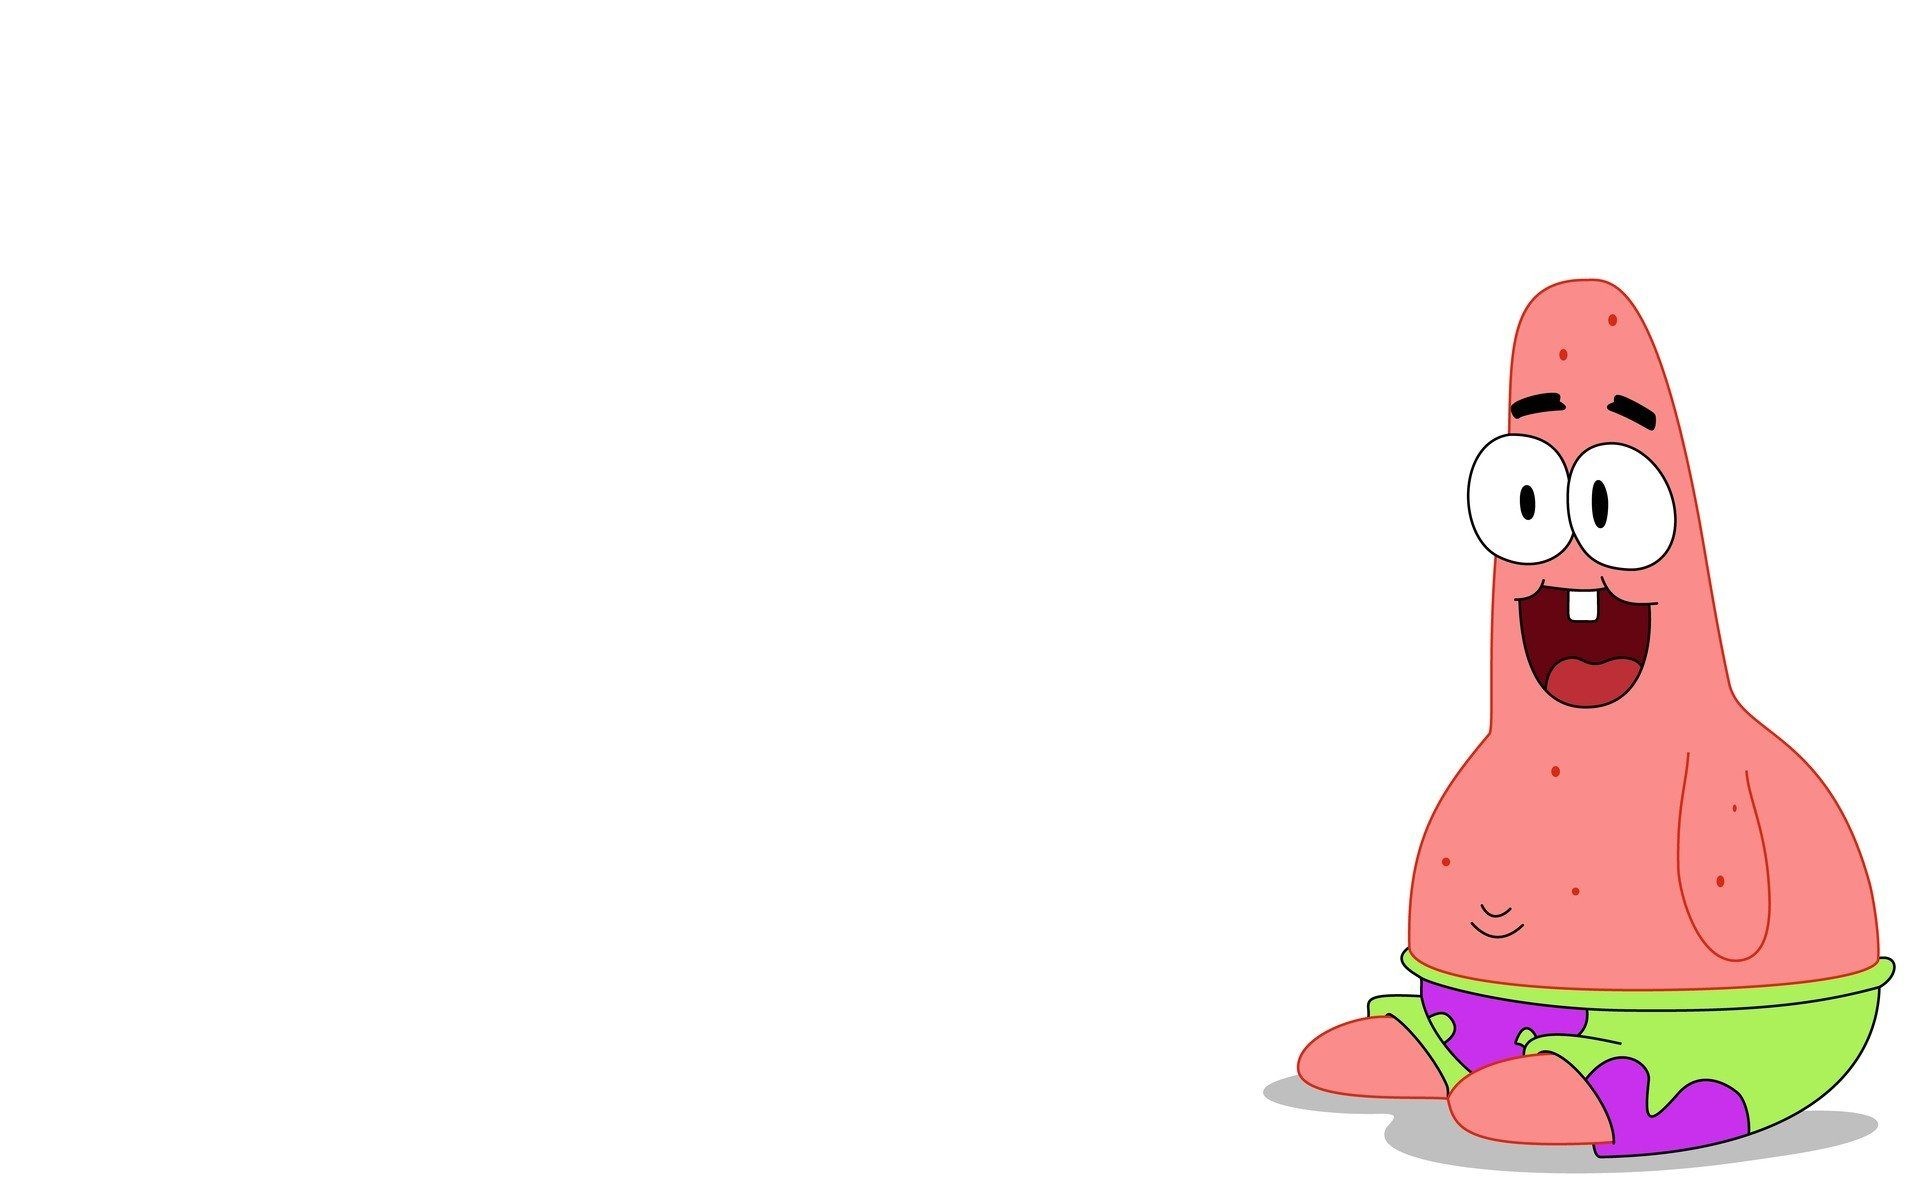 Patrick star spongebob squarepants animated background wallpaper original desktop